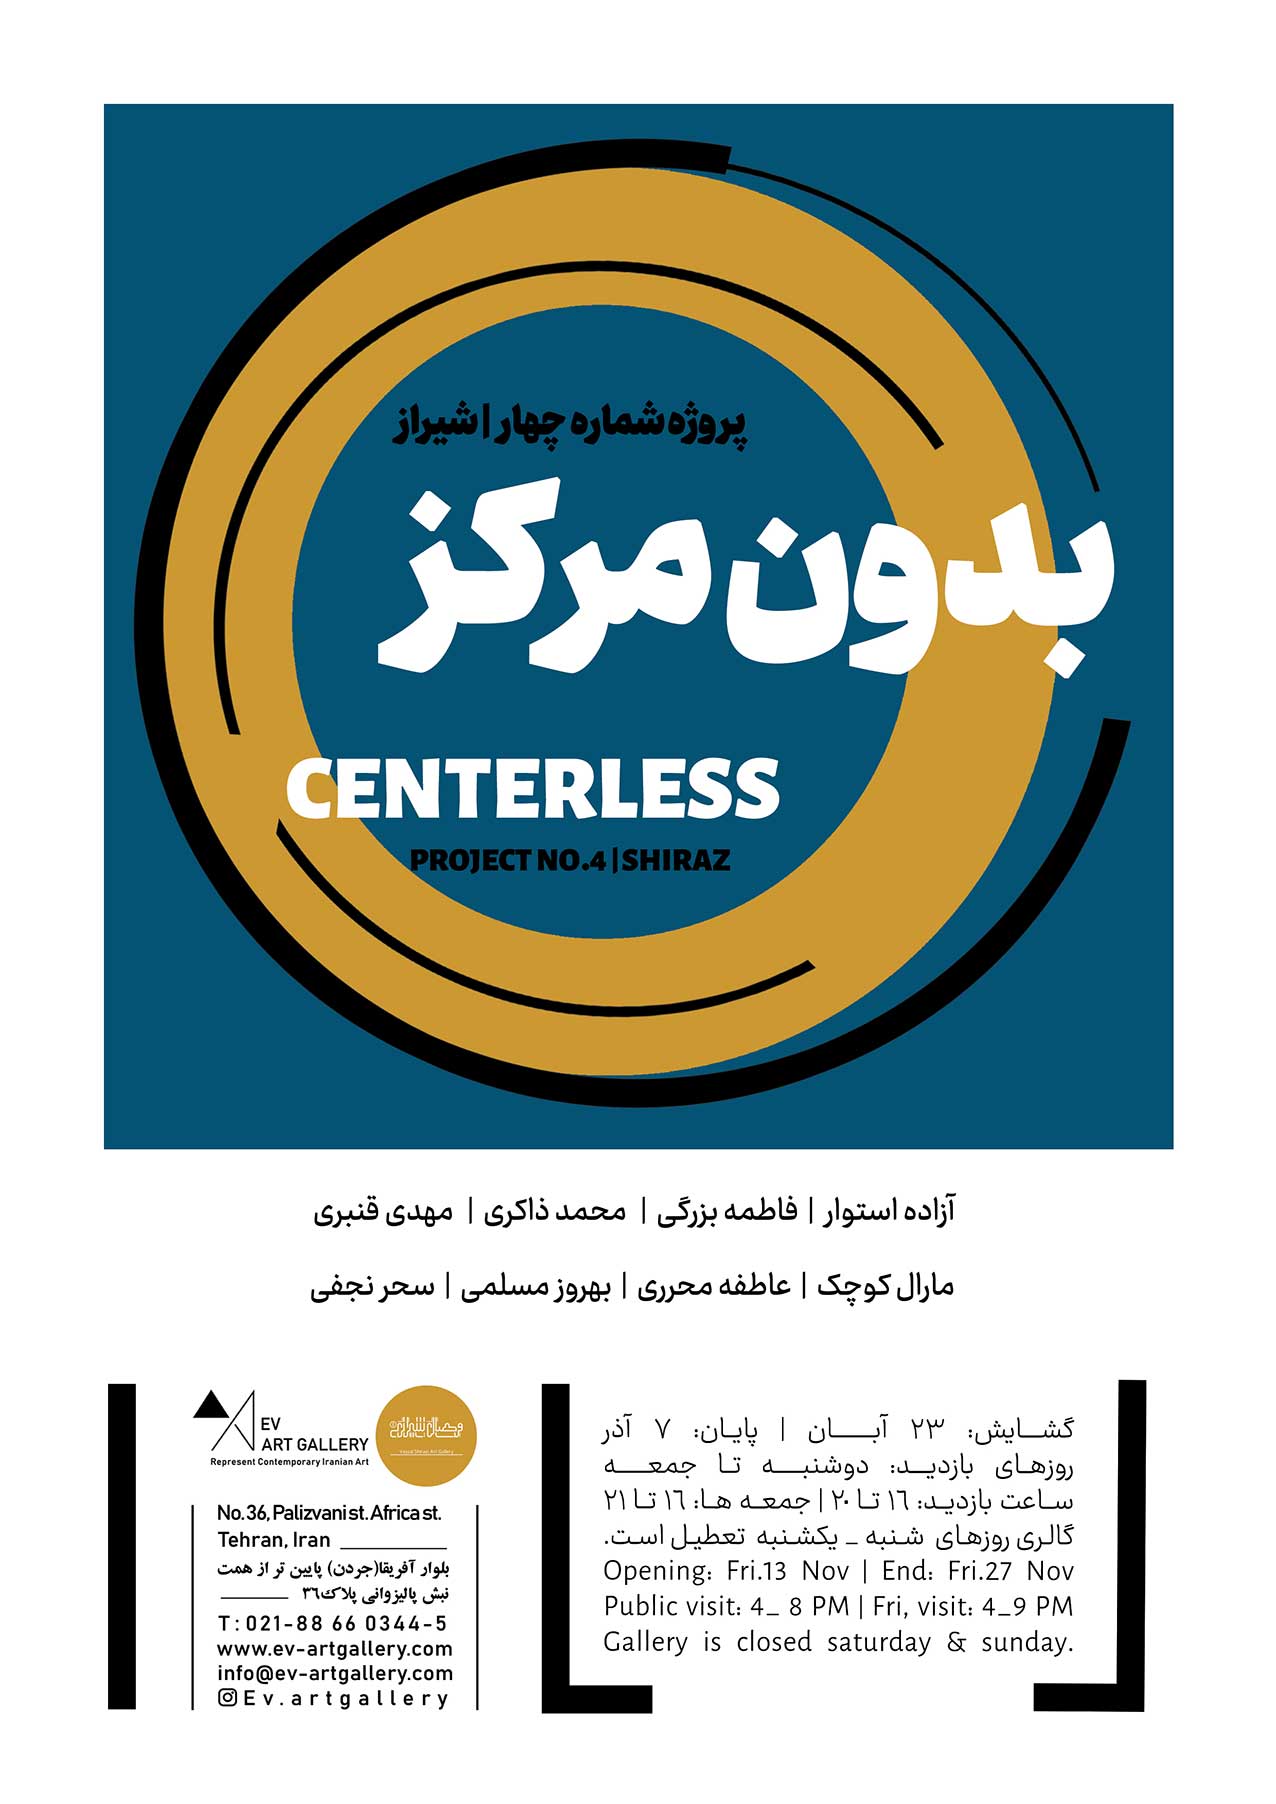 Centerless